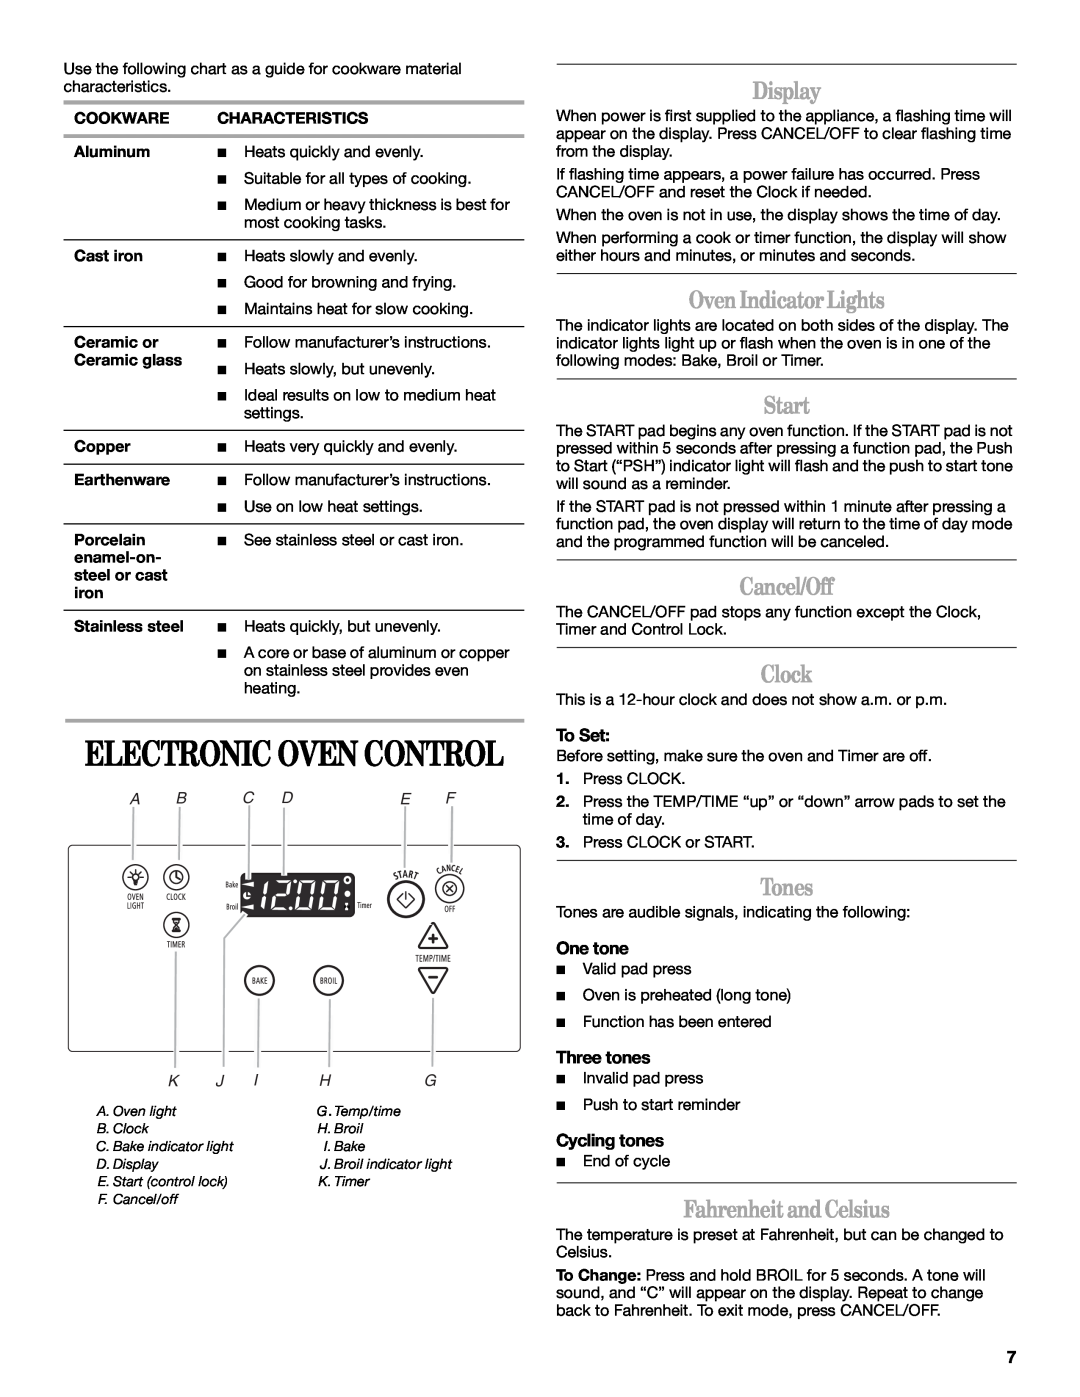 Whirlpool W10200947A manual Electronic Oven Control, Display, OvenIndicatorLights, Start, Cancel/Off, Clock, Tones, To Set 